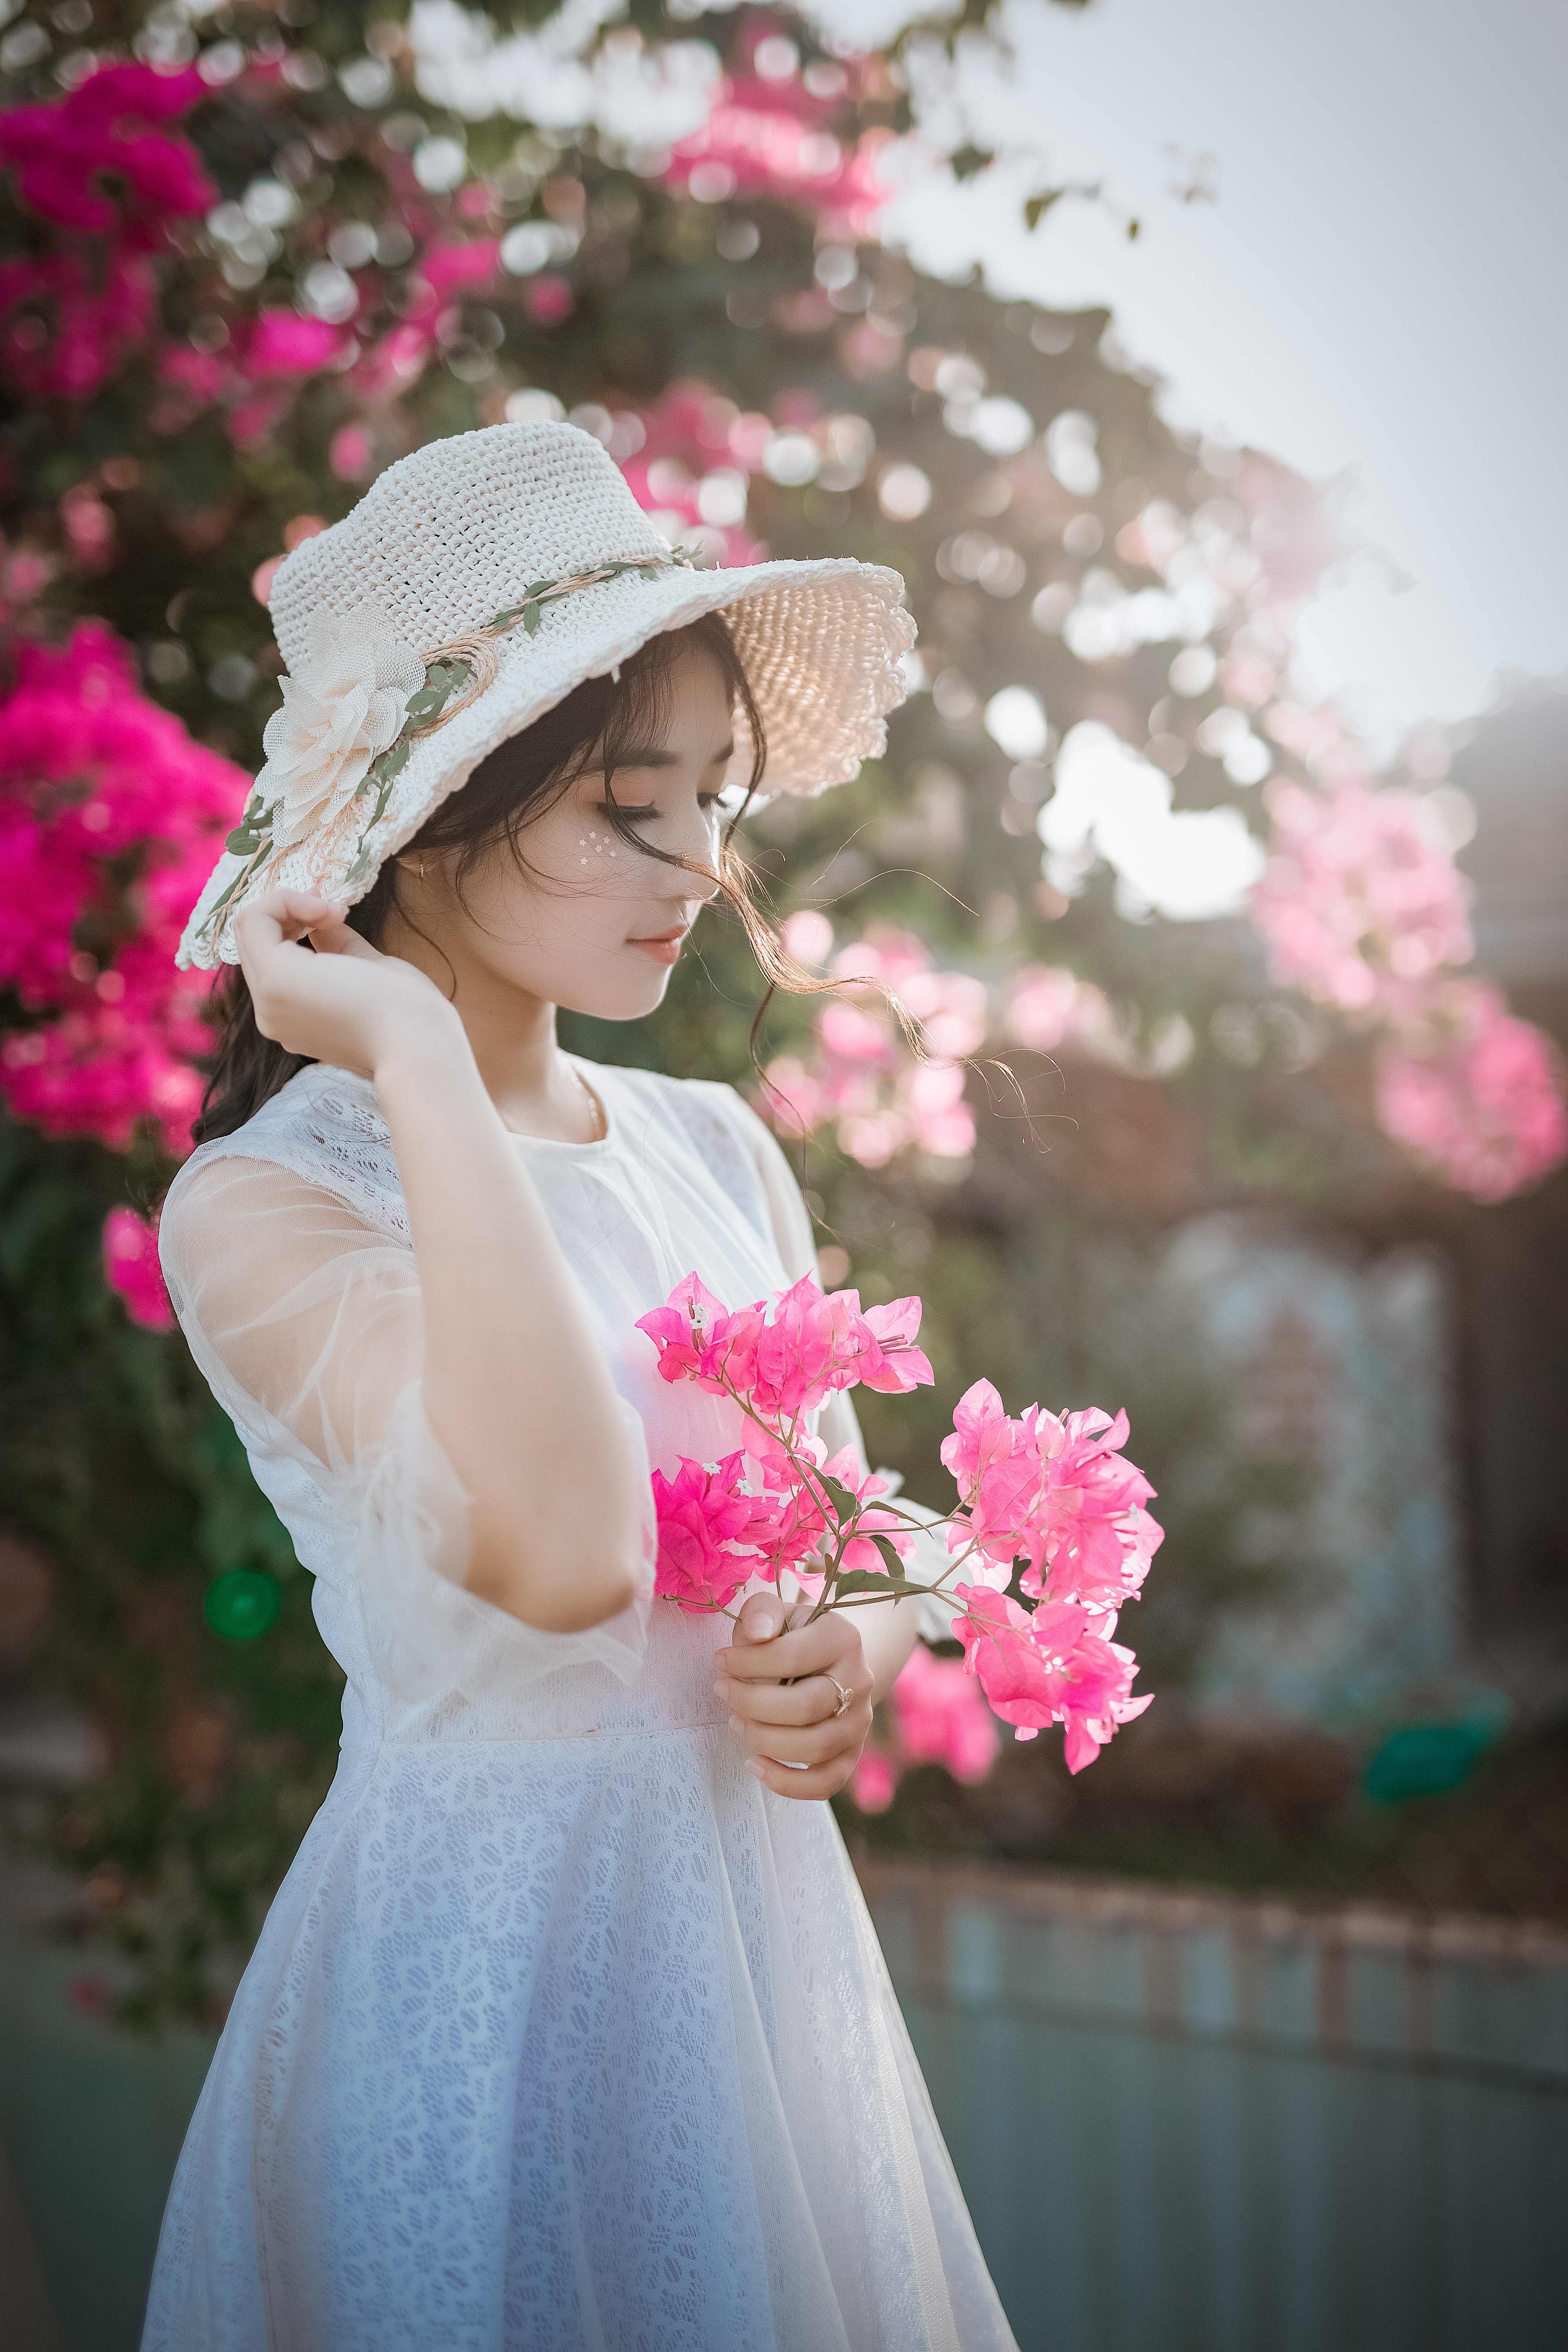 Woman Holding Flowers - Cute Girl , HD Wallpaper & Backgrounds